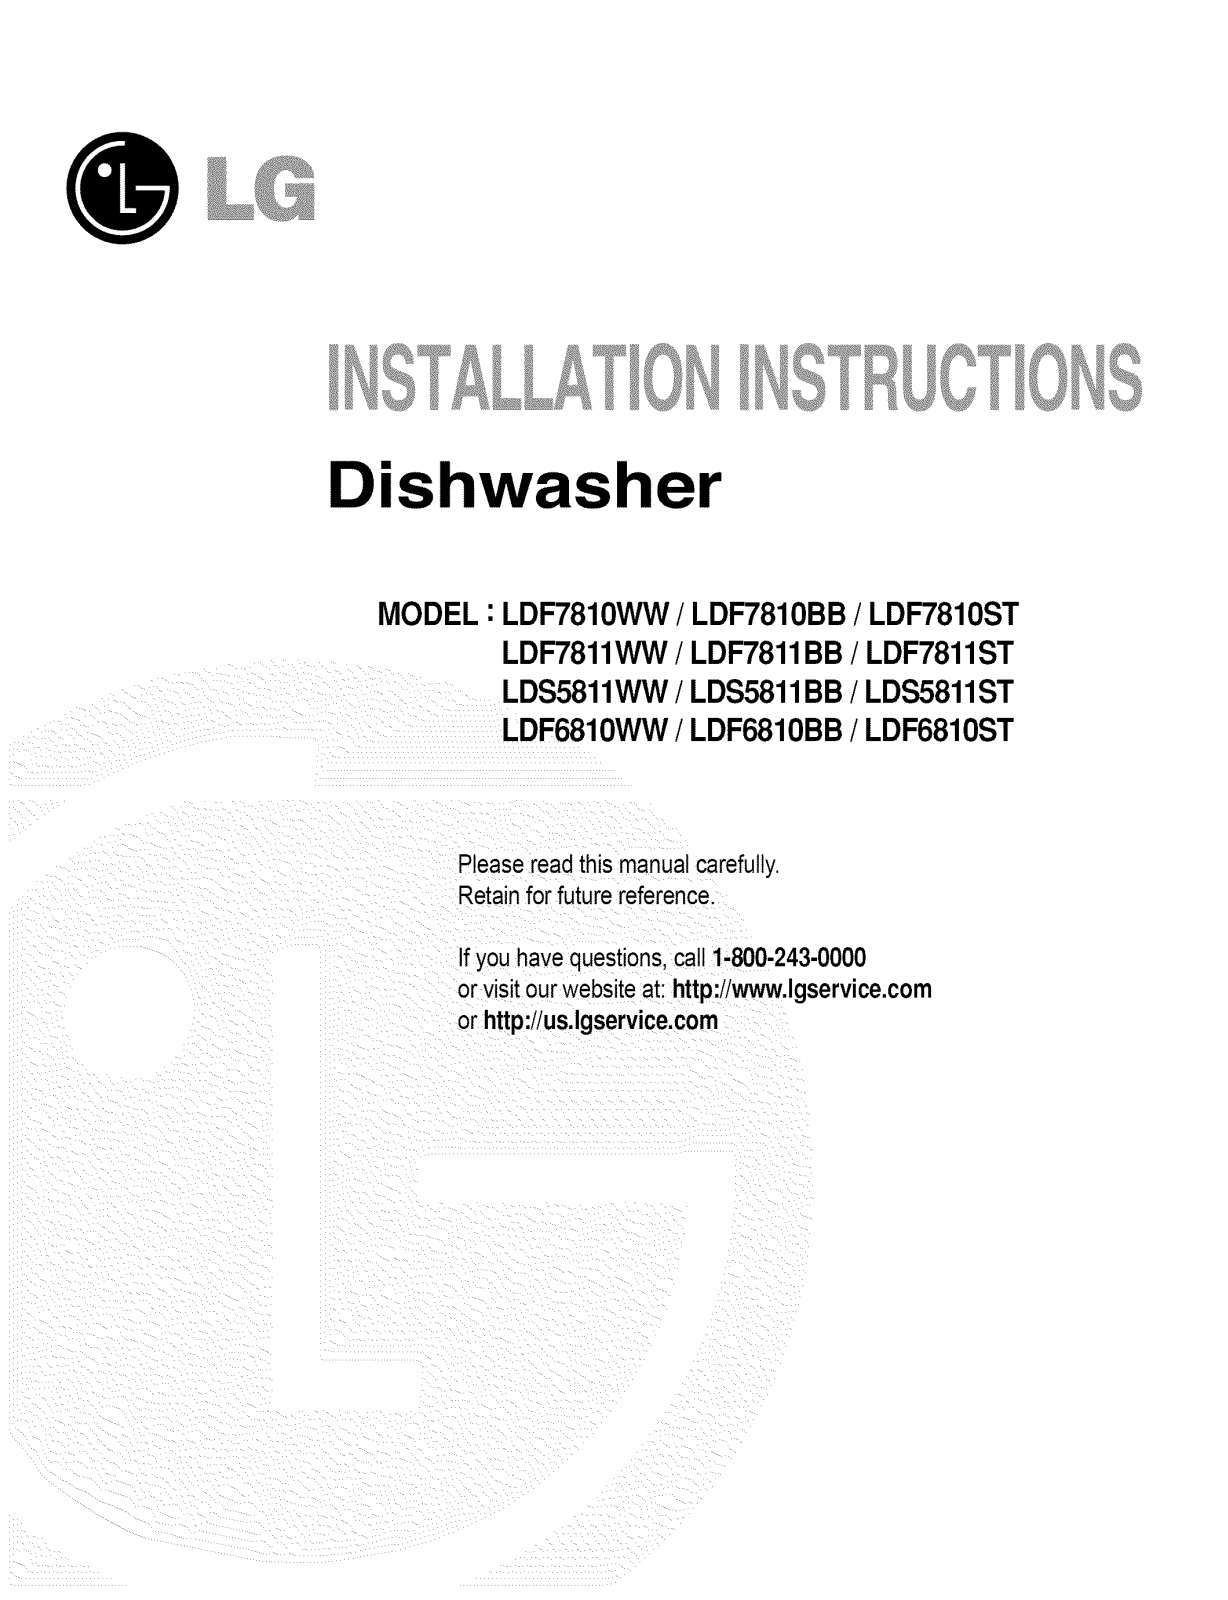 LG LDS5811BB, LDS5811ST, LDF9810ST, LDF8812ST, LDF7811BB Installation Guide